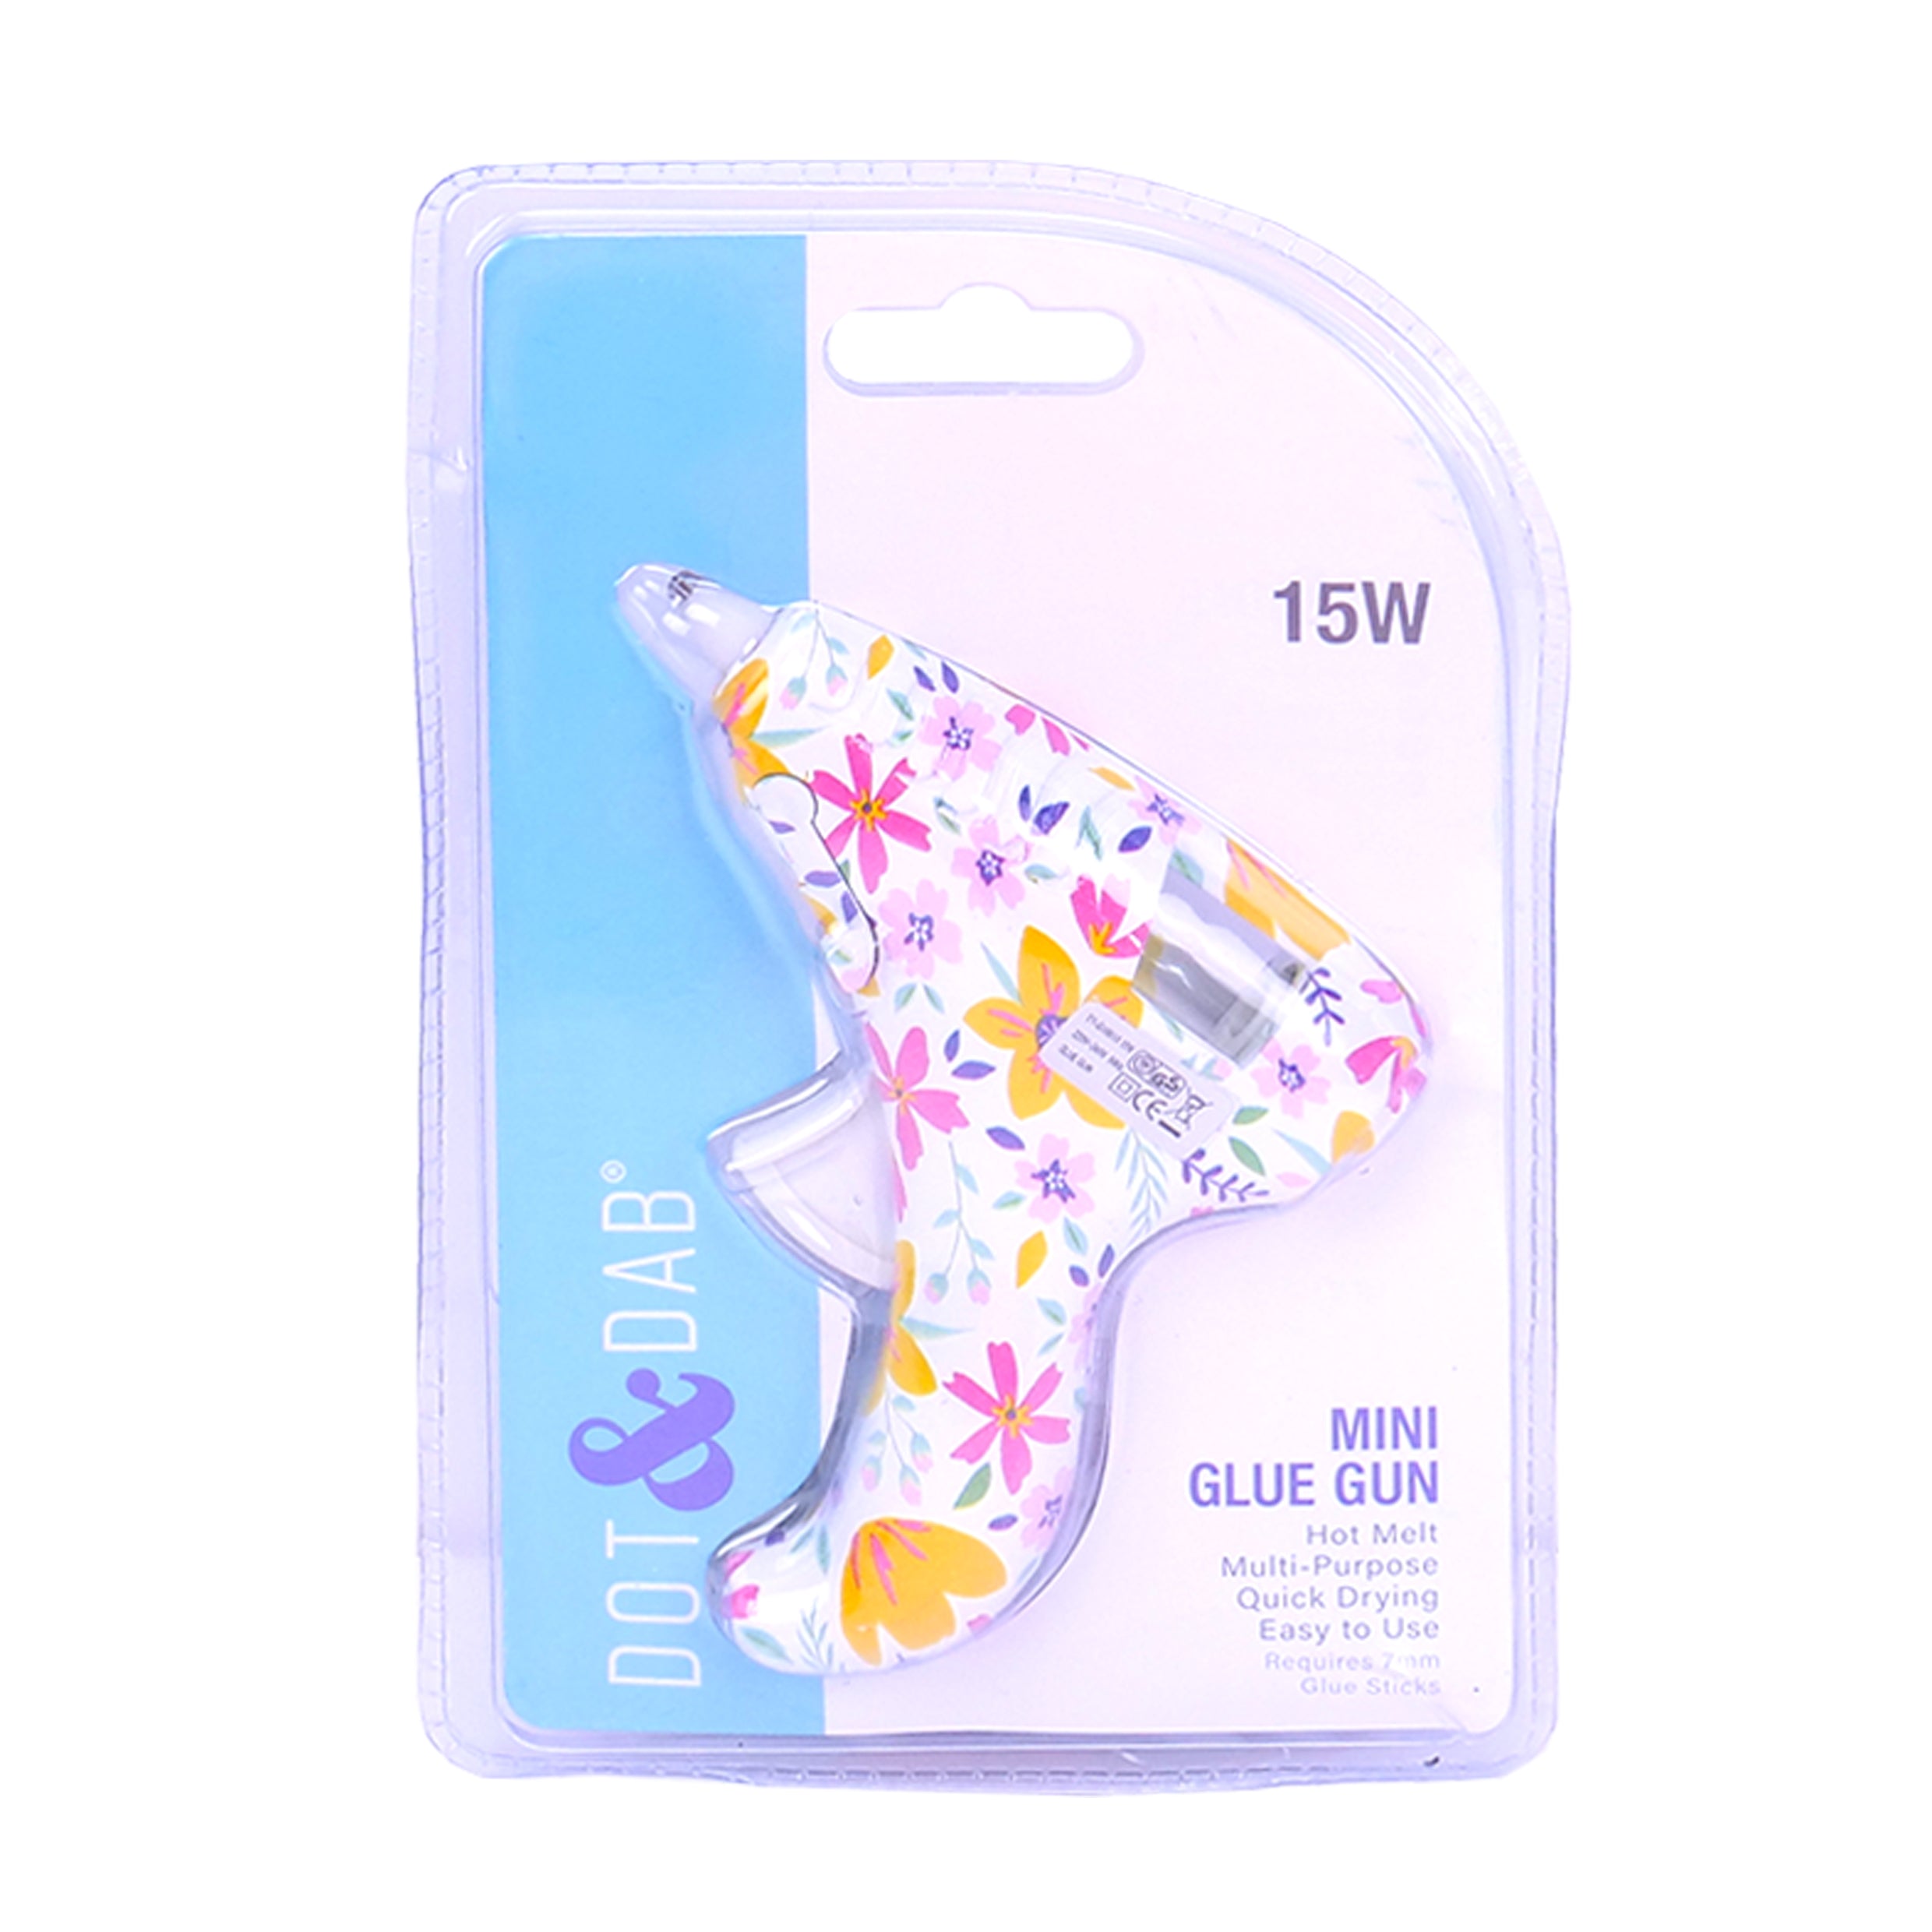 Glue Gun Sticks - Mini By Dot & Dab